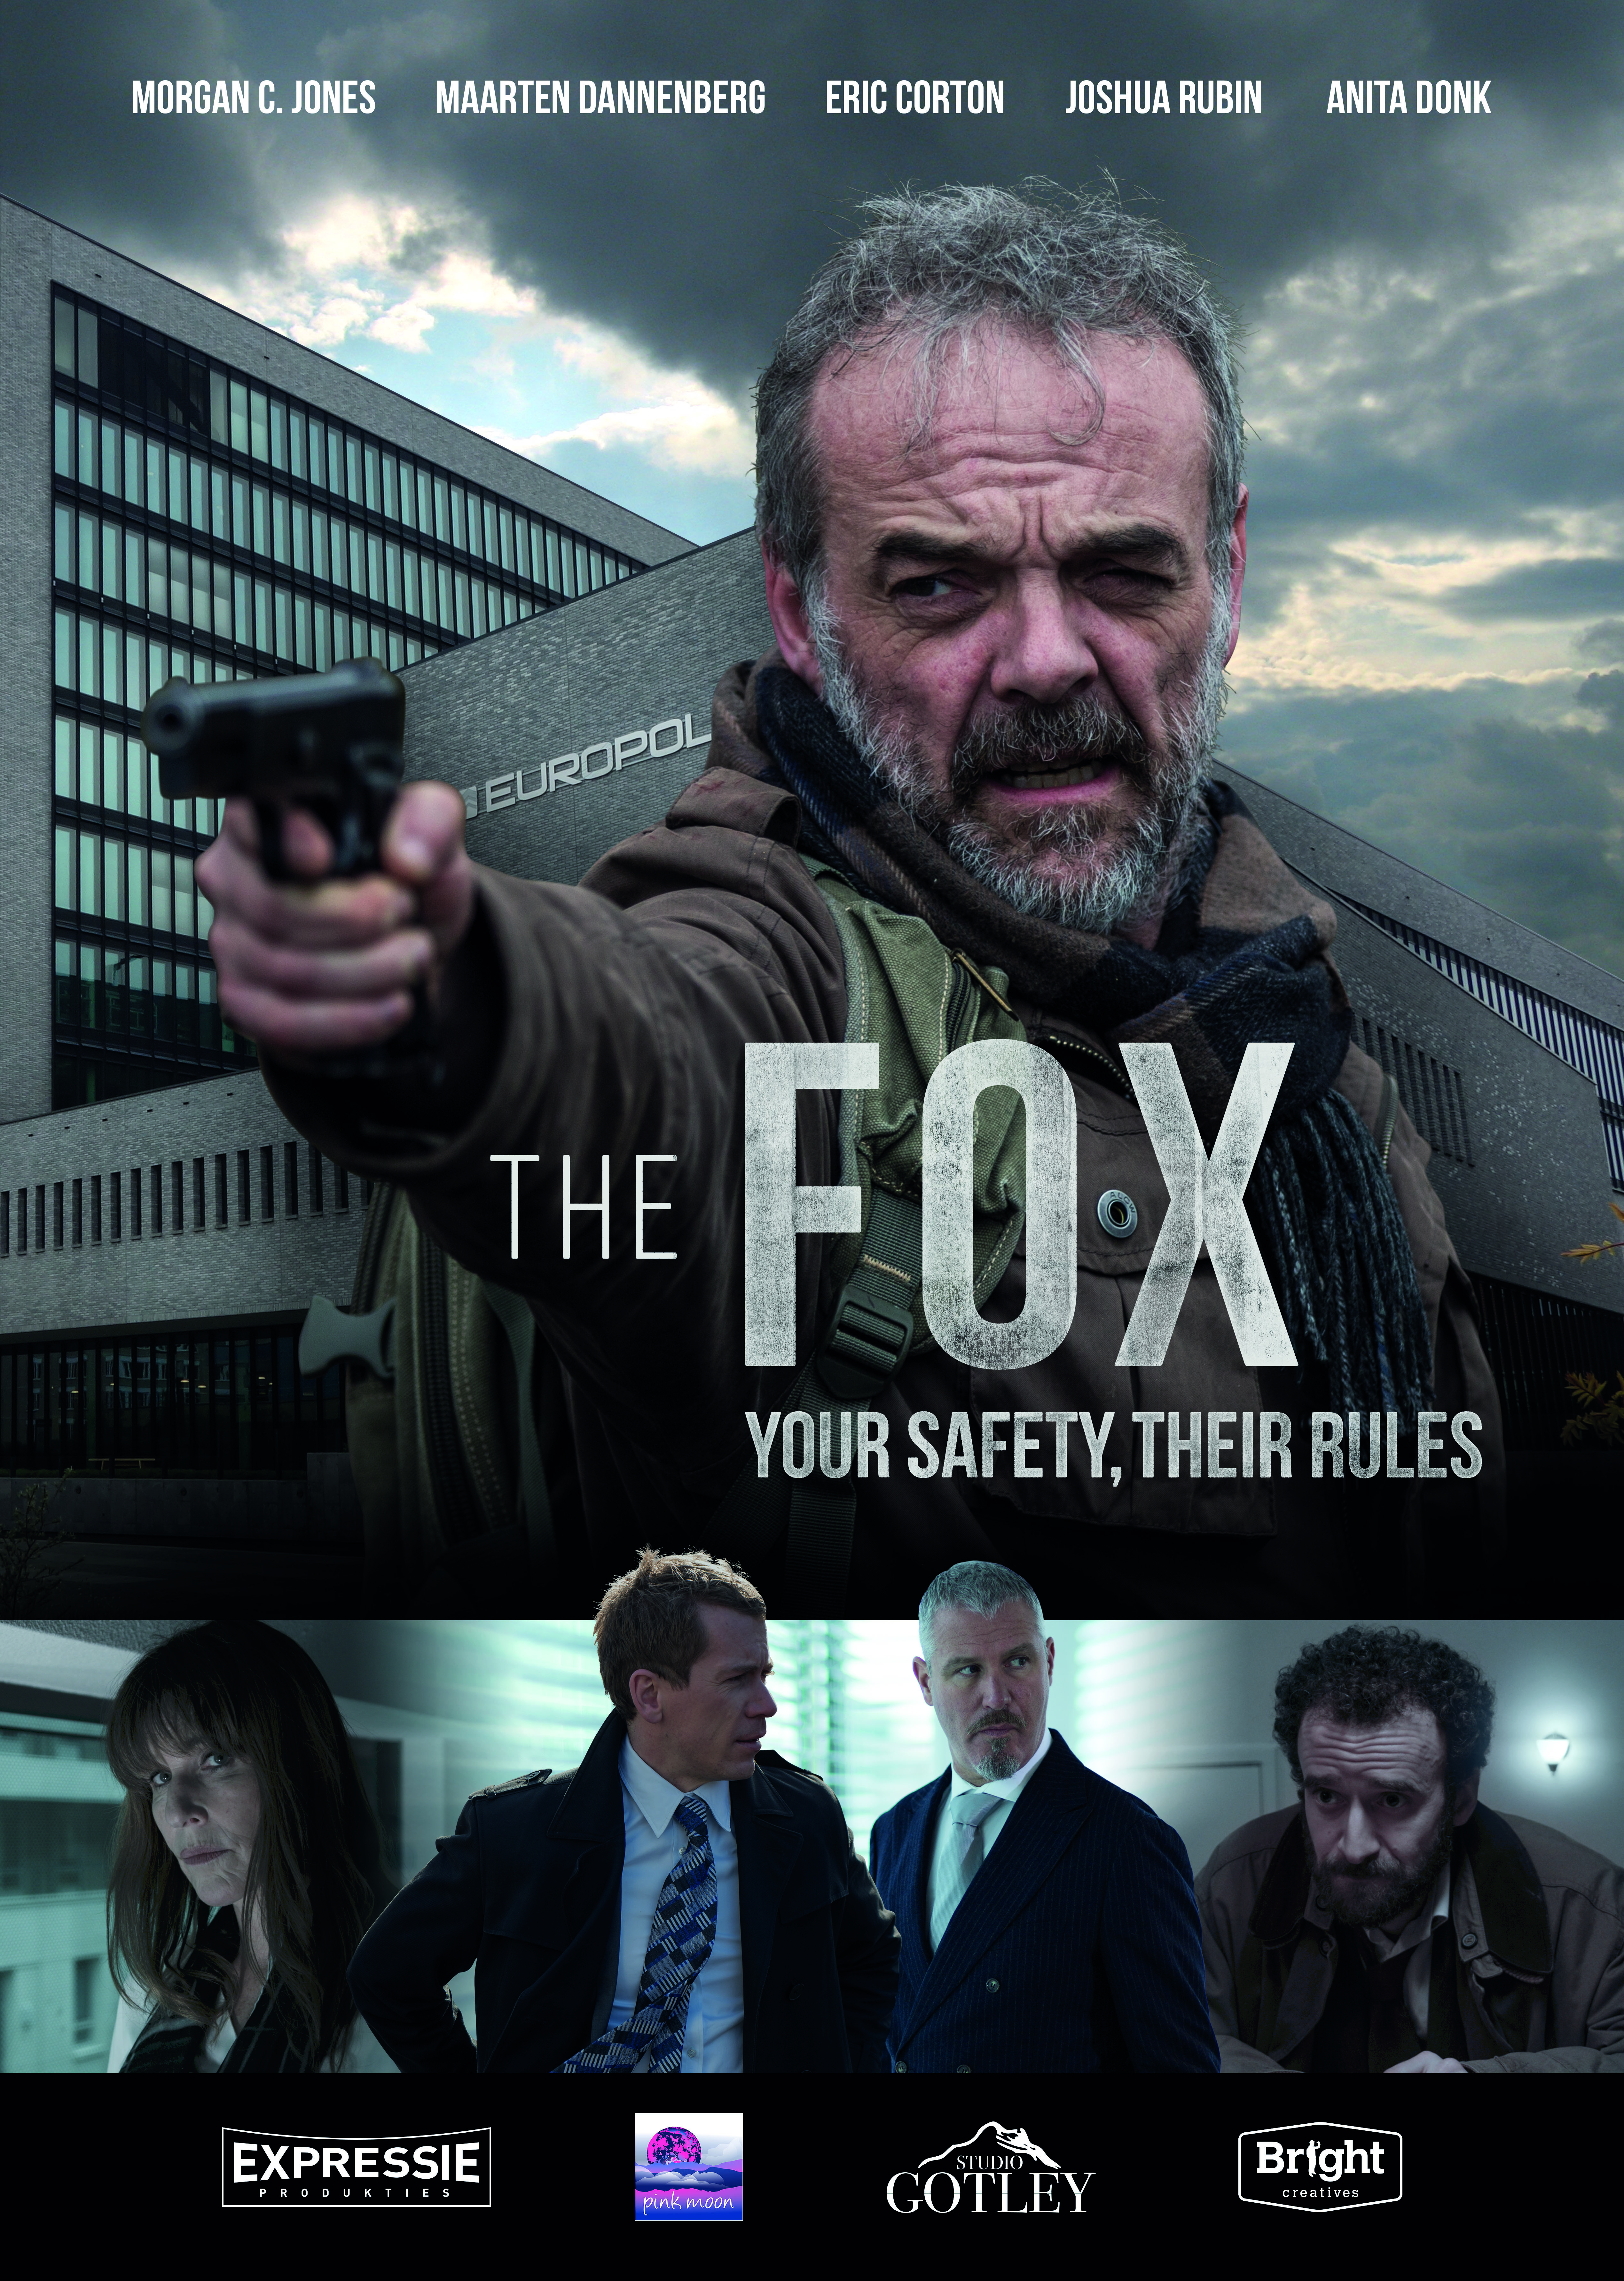 Nonton film The Fox layarkaca21 indoxx1 ganool online streaming terbaru